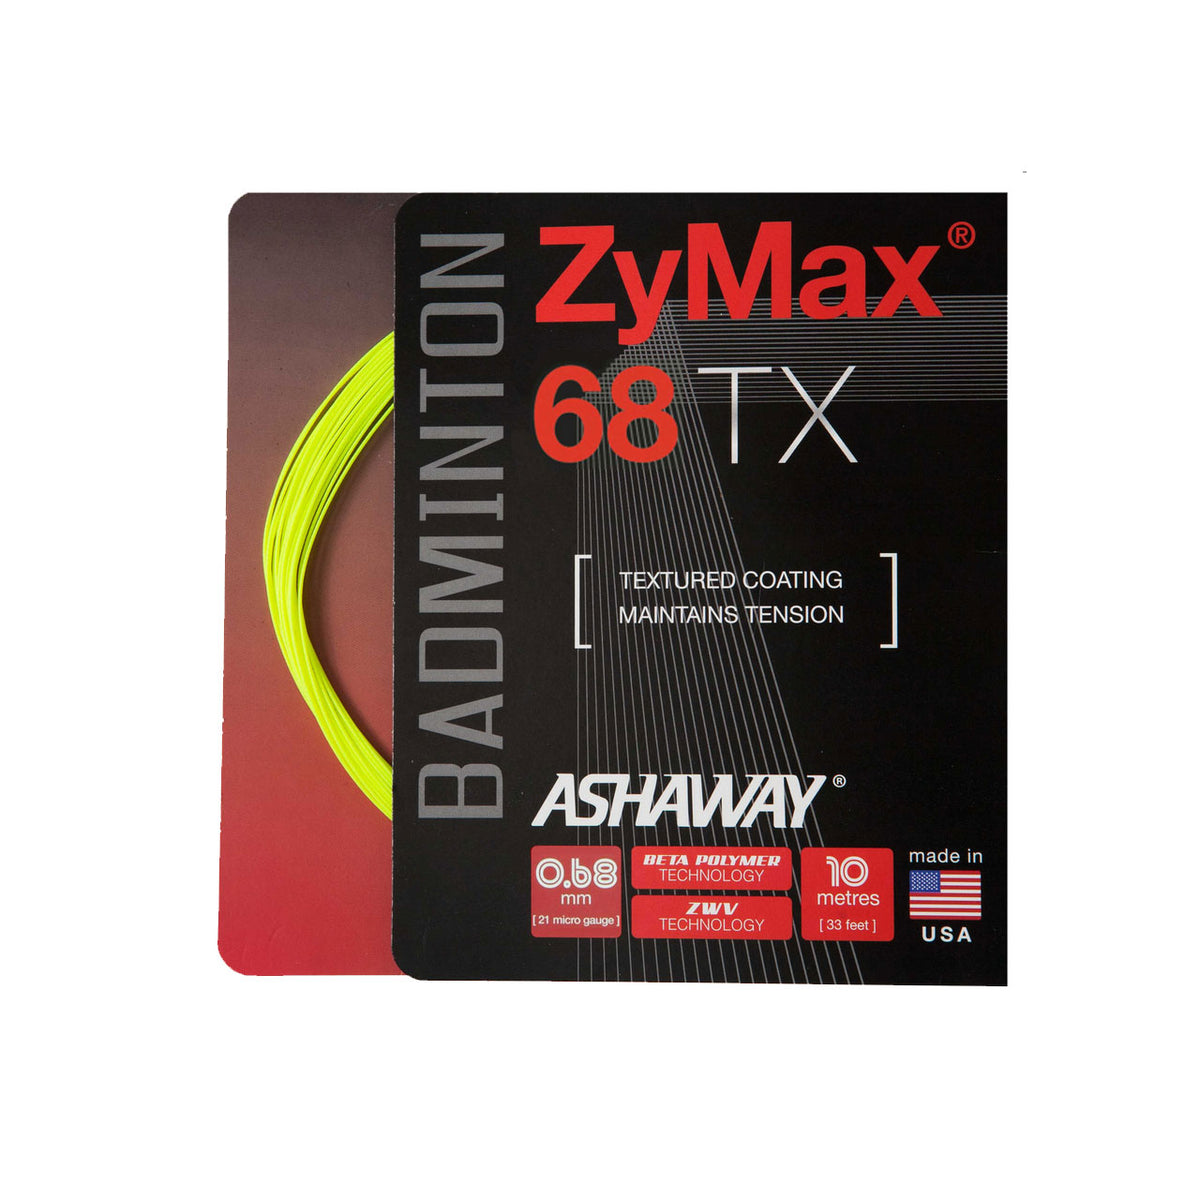 Ashaway Zymax 68TX String (10m Set) Yellow